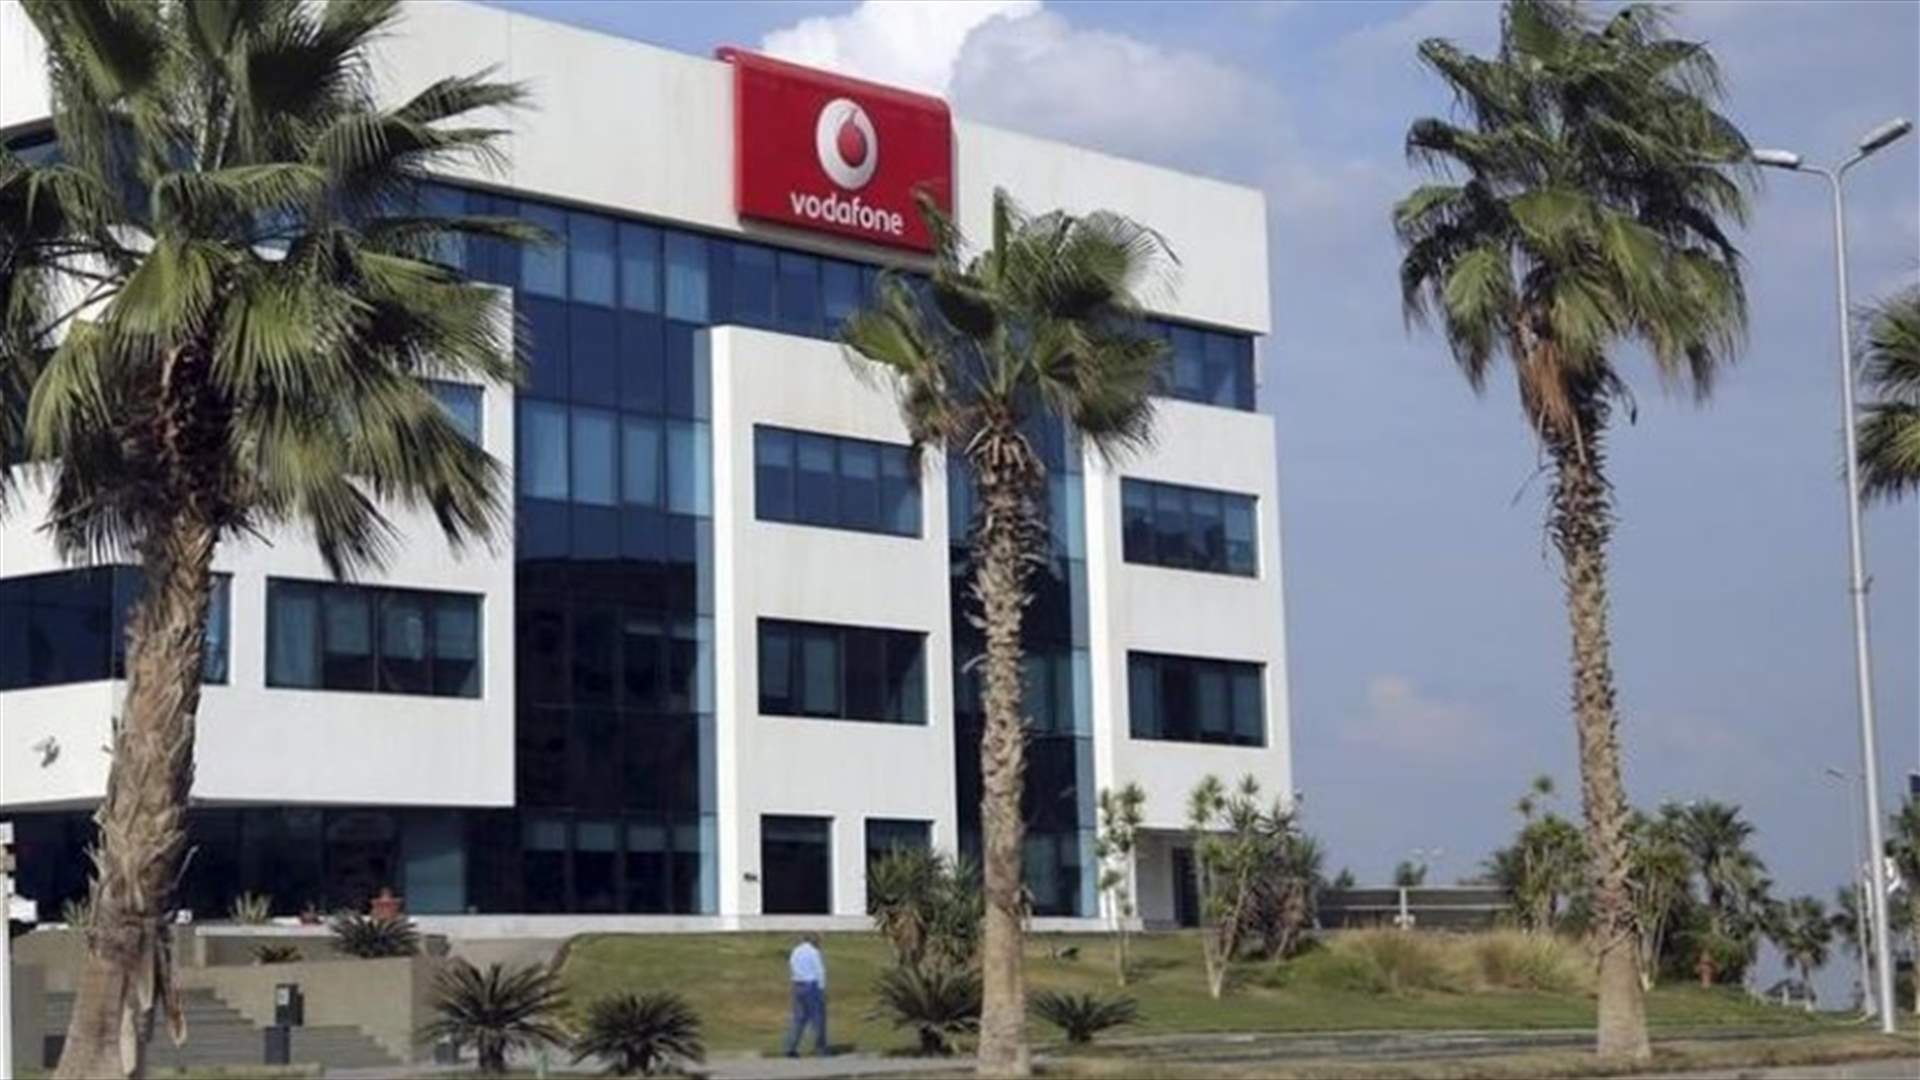 Vodafone Egypt, Etisalat sign 4G license agreements with regulator